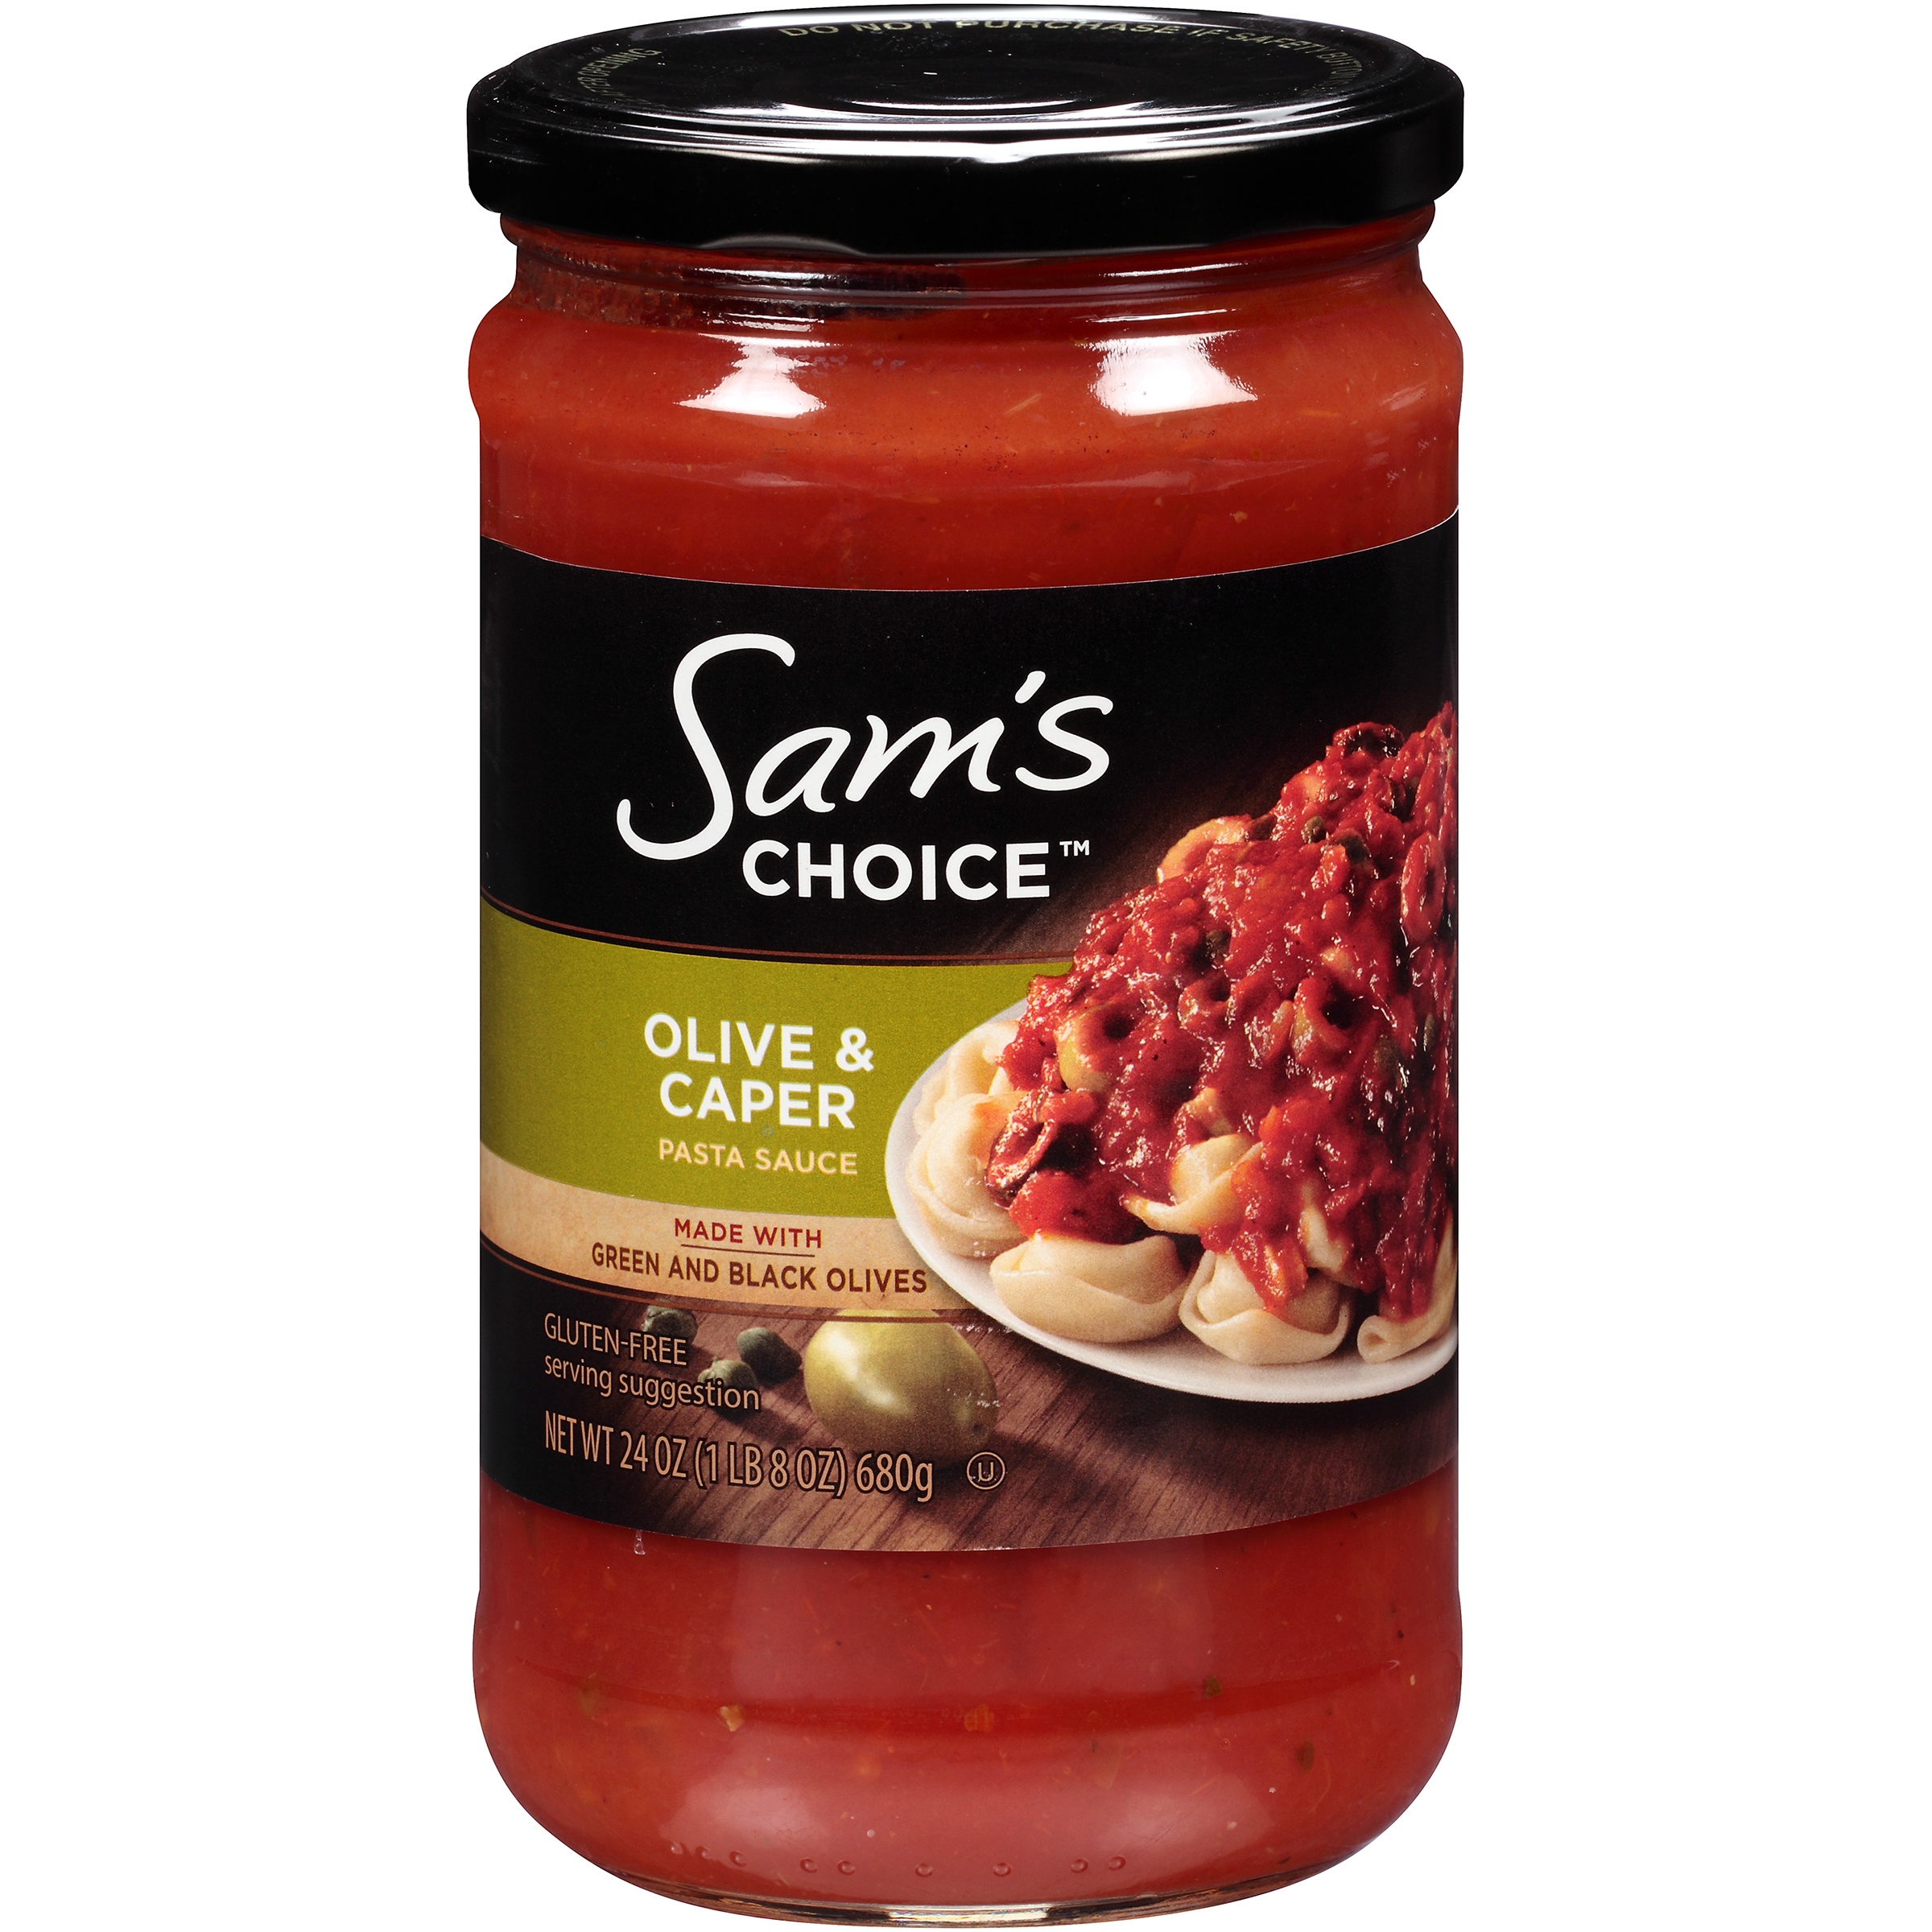 Sam's Choice Olive & Caper Pasta Sauce 24 Oz. Jar Image